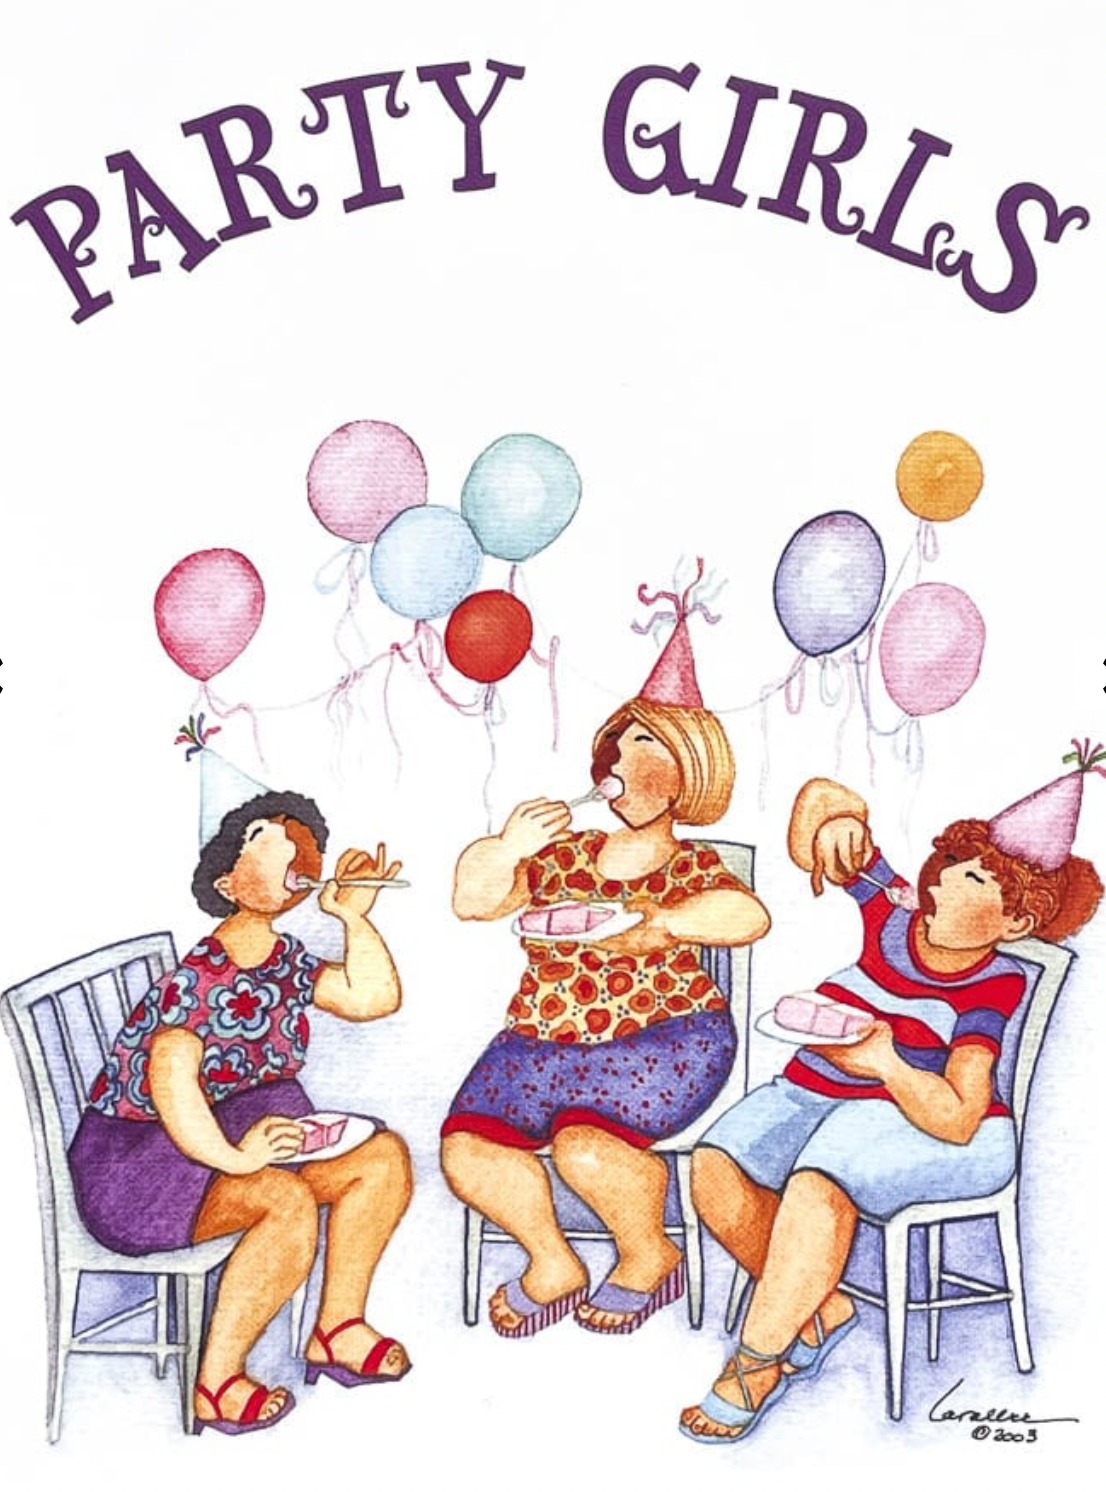 PARTY GIRLS BIRTHDAY ART CARD